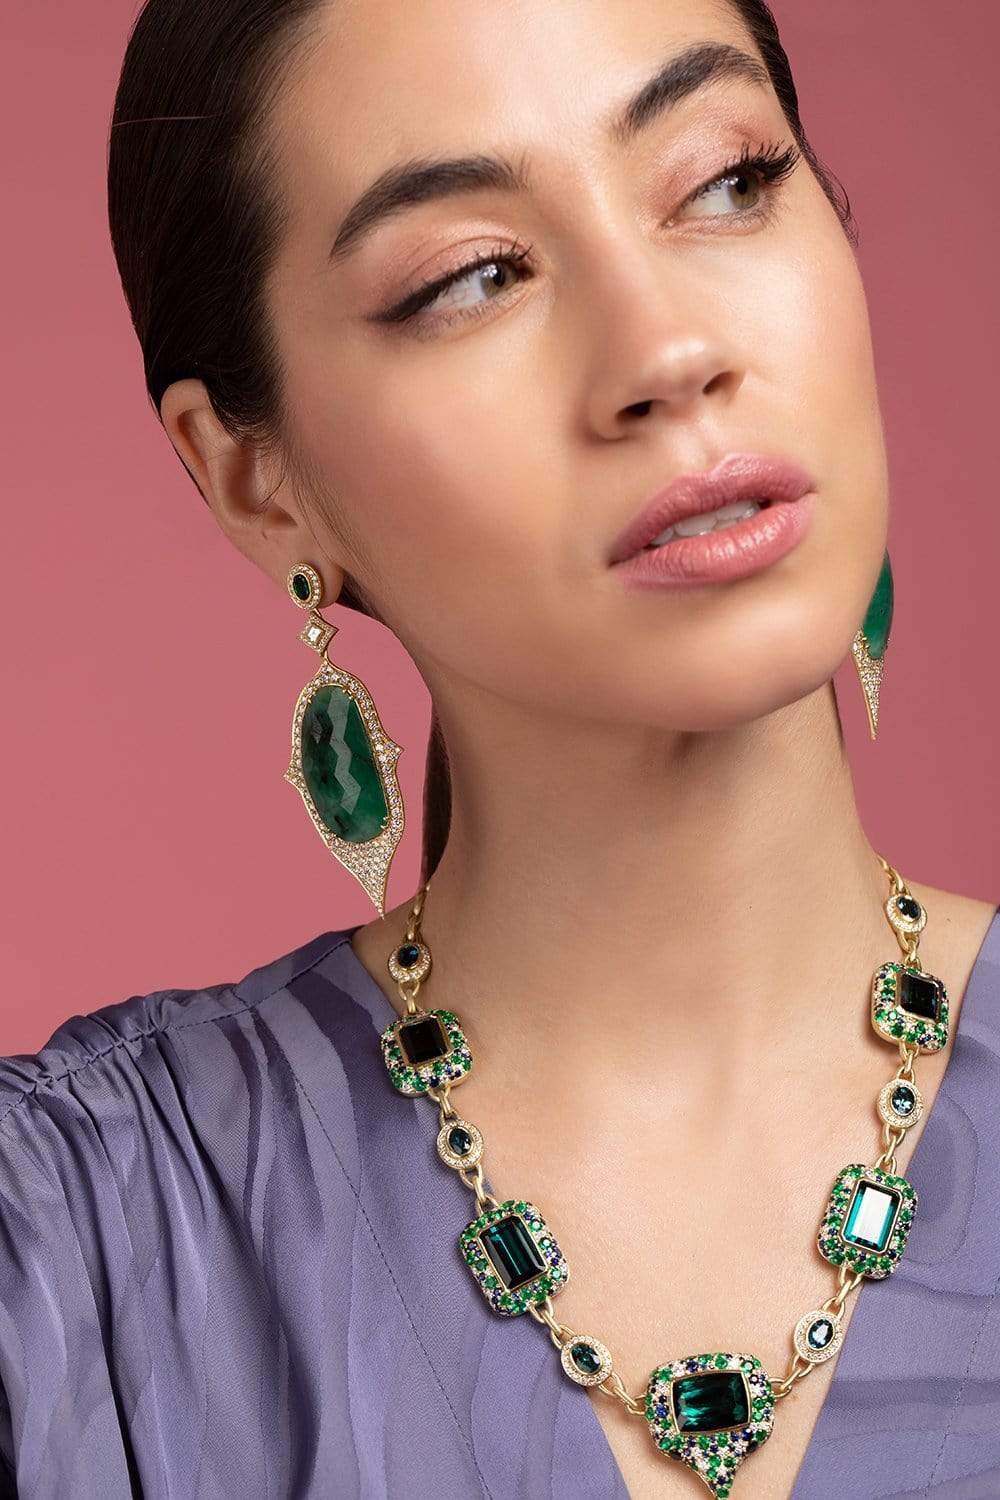 JARED LEHR-Emerald and Tsavorite Earrings-YELLOW GOLD